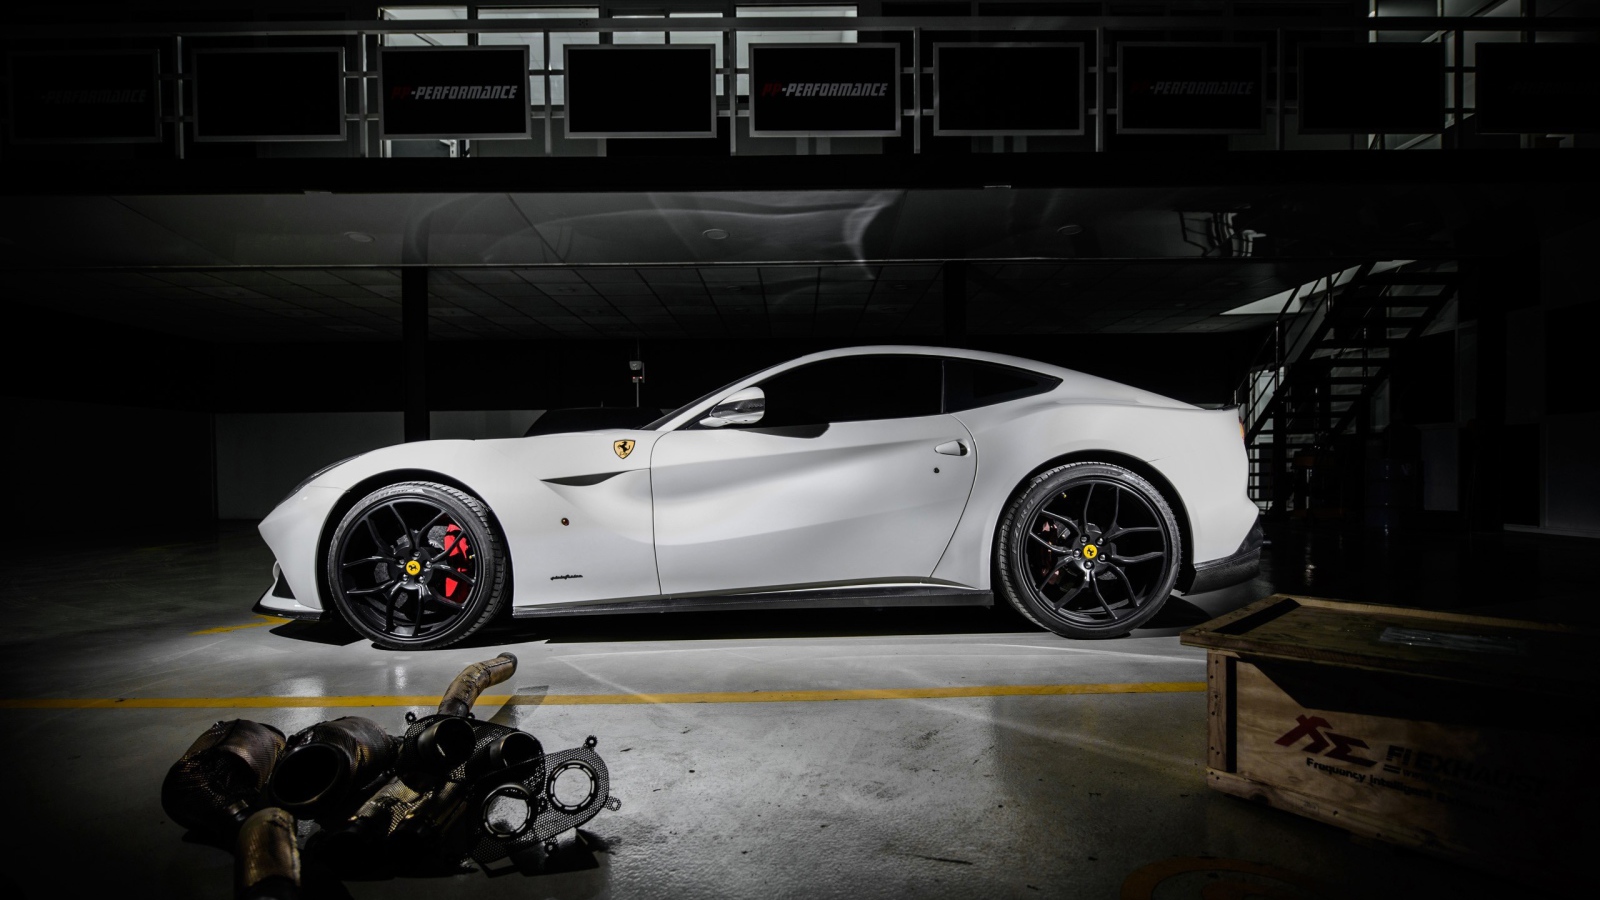 White Ferrari in the garage